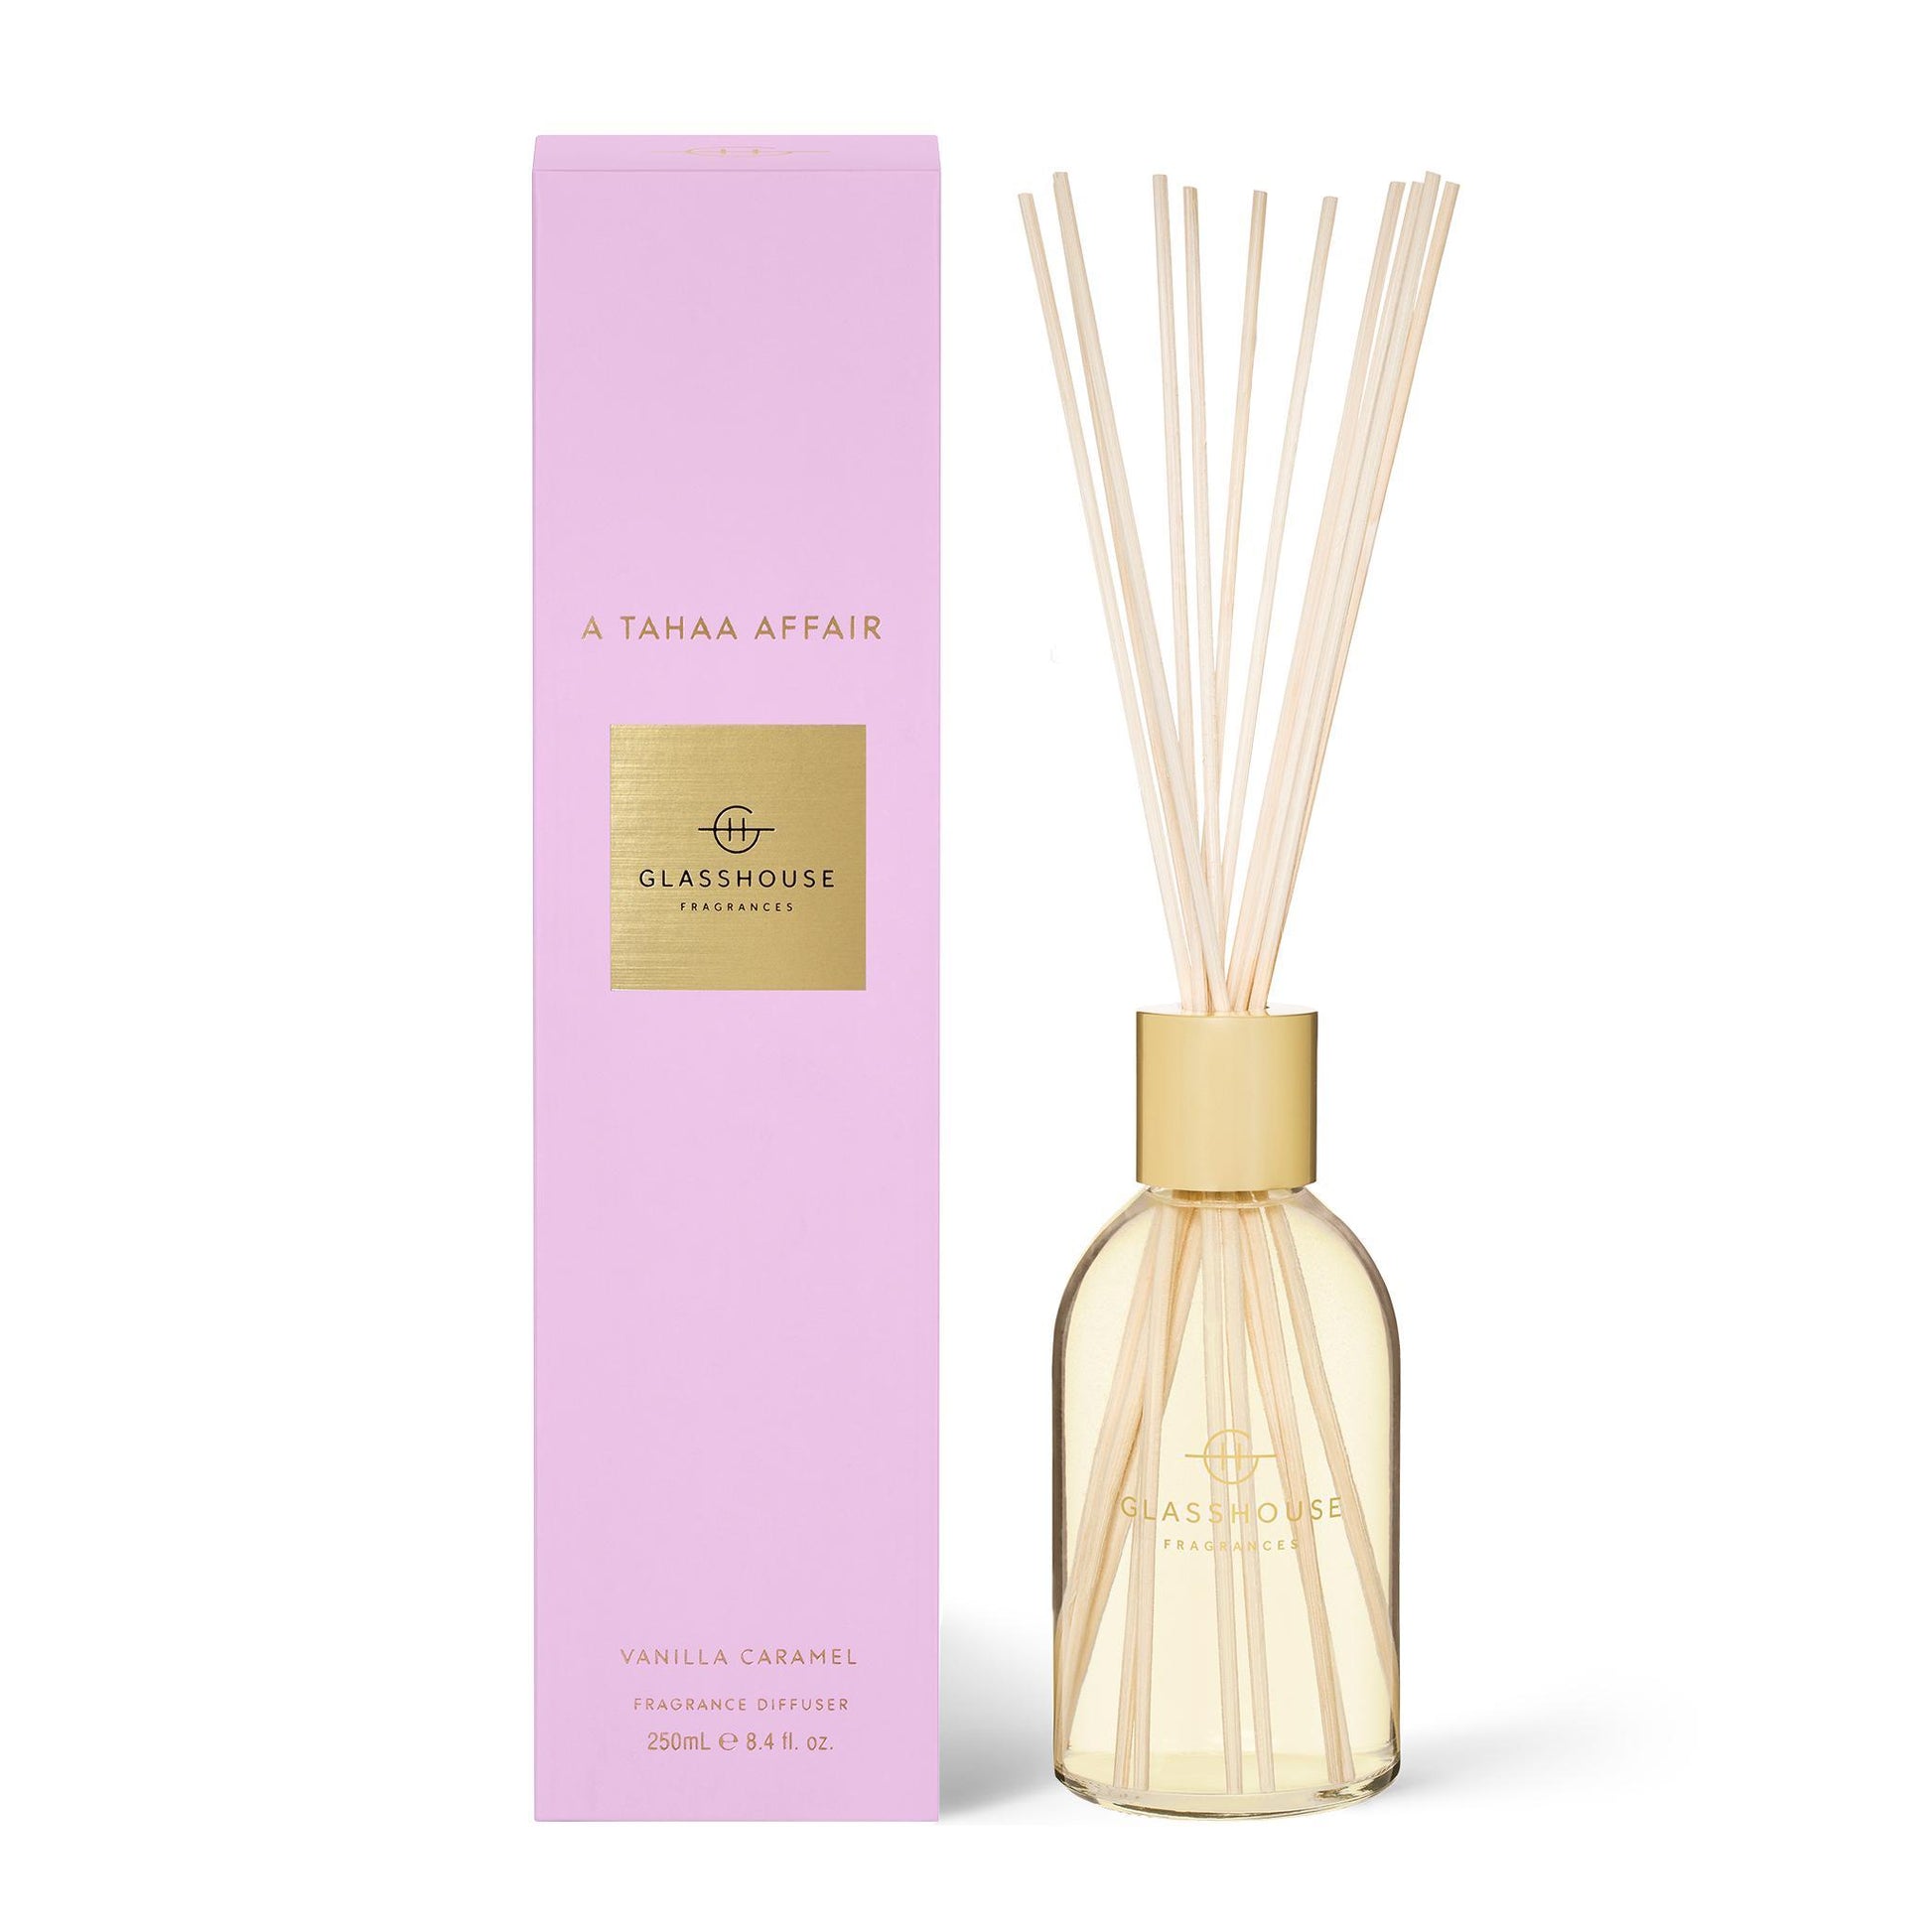 Diffuser 250ml - A Tahaa Affair - Glasshouse Fragrances - FUDGE Gifts Home Lifestyle